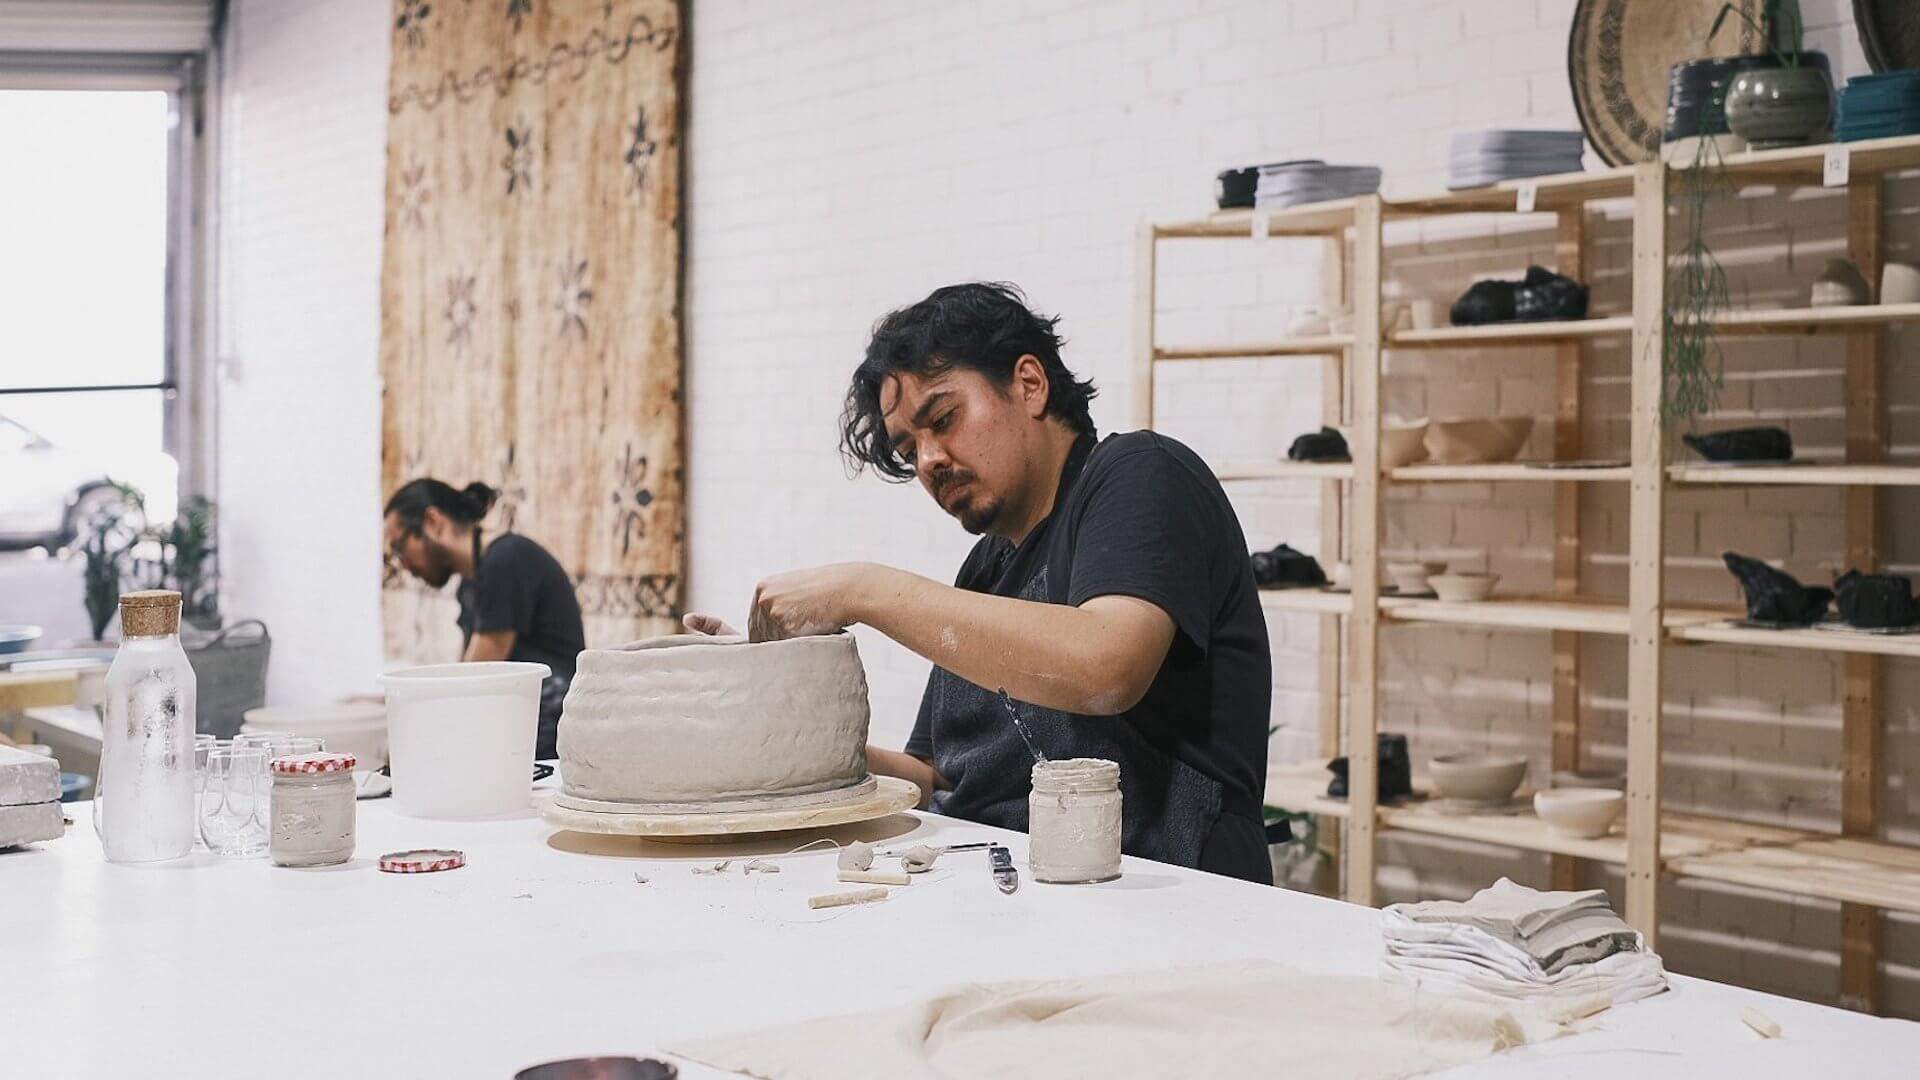 Pottery/ ceramics classes at The Wheelhouse Studio in South Melbourne.